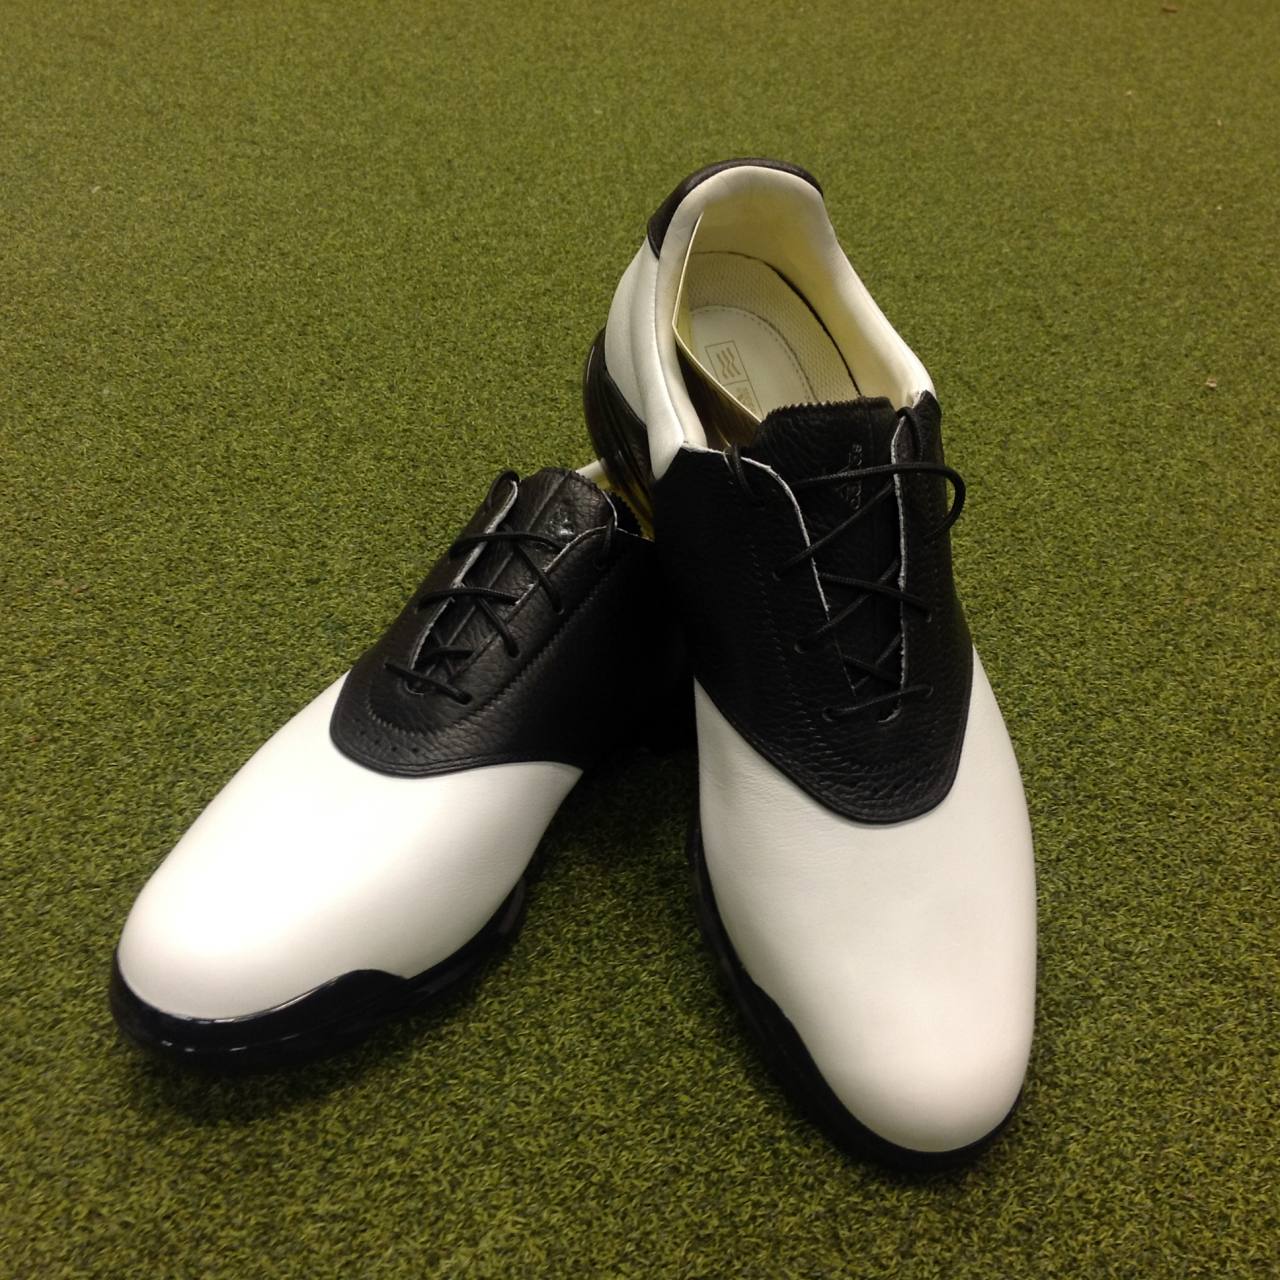 adidas adipure classic golf shoes